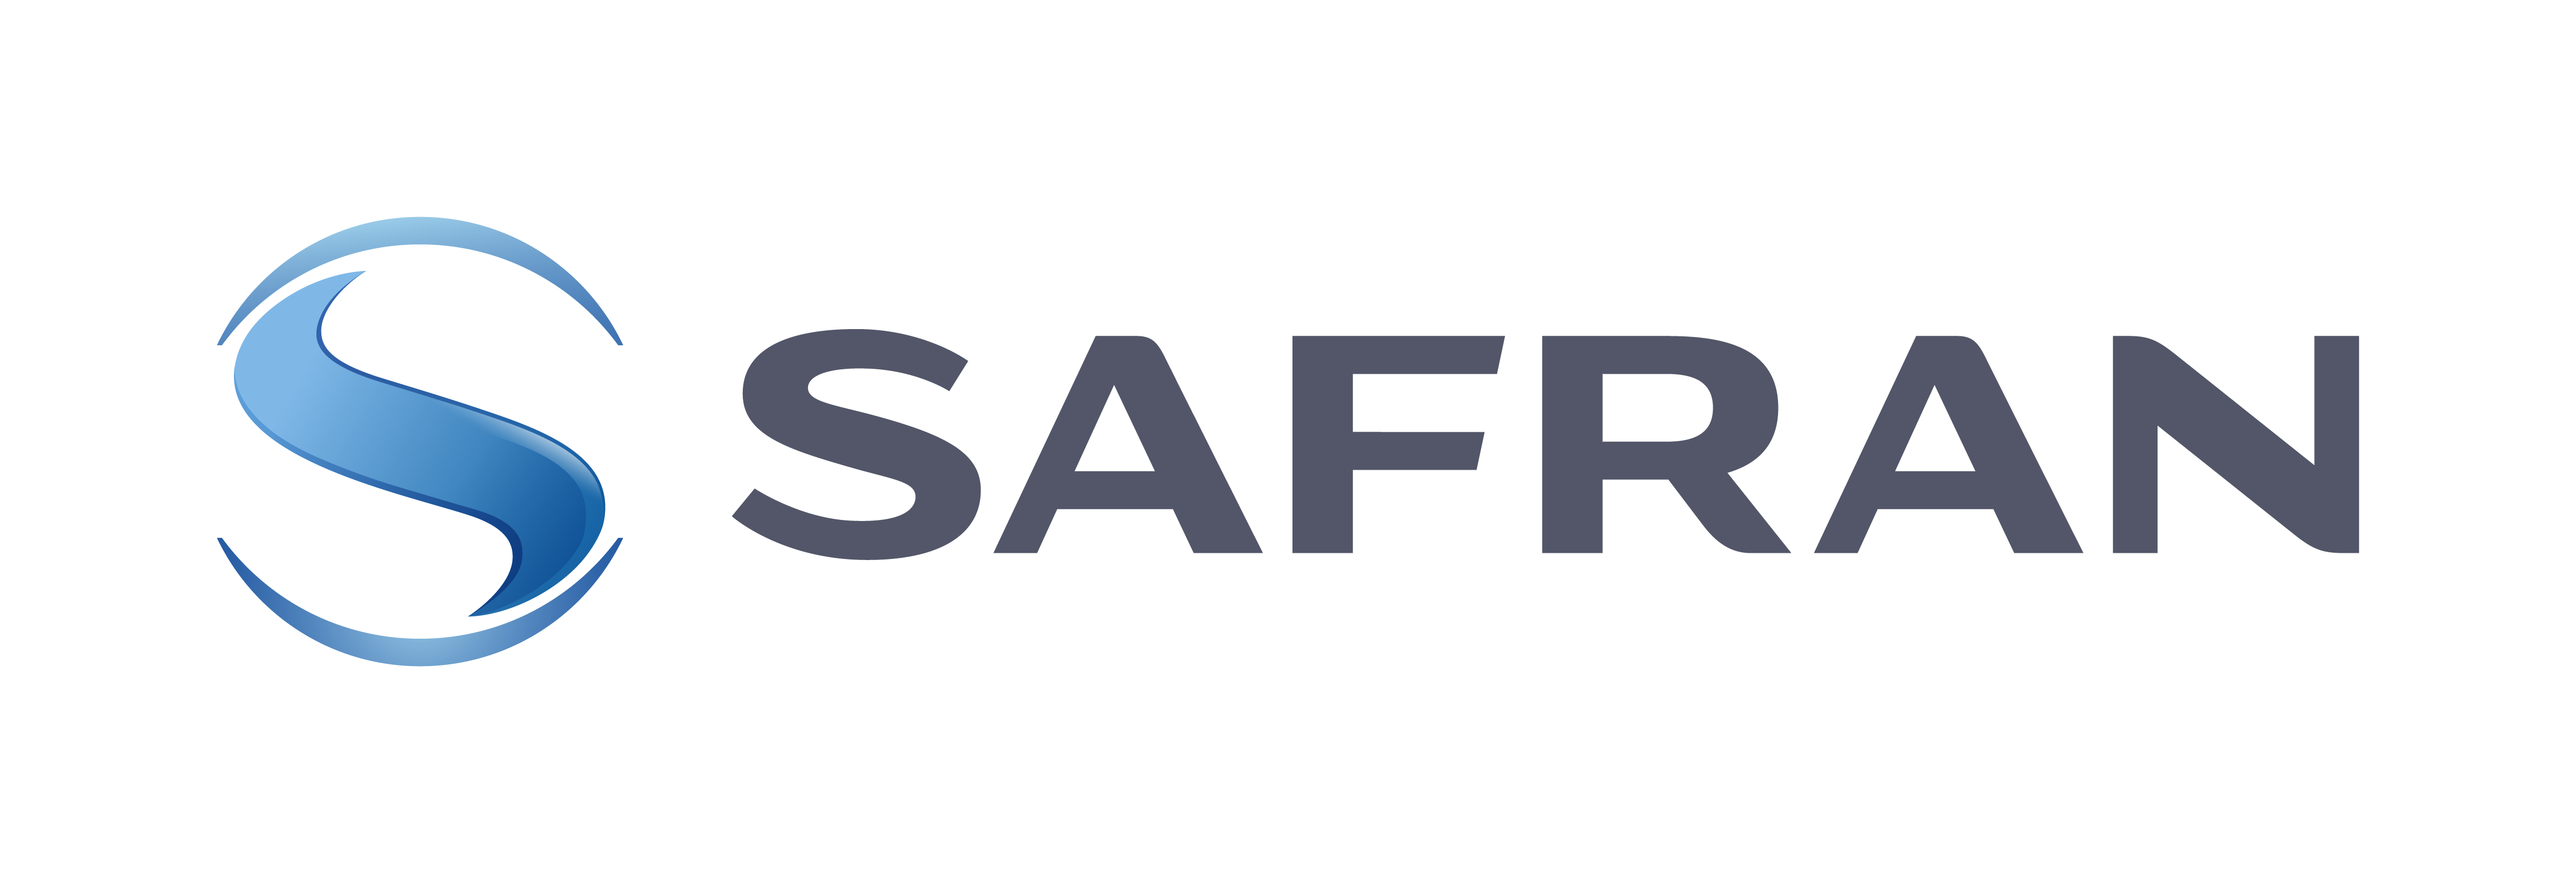 Safran Trusted 4D logo